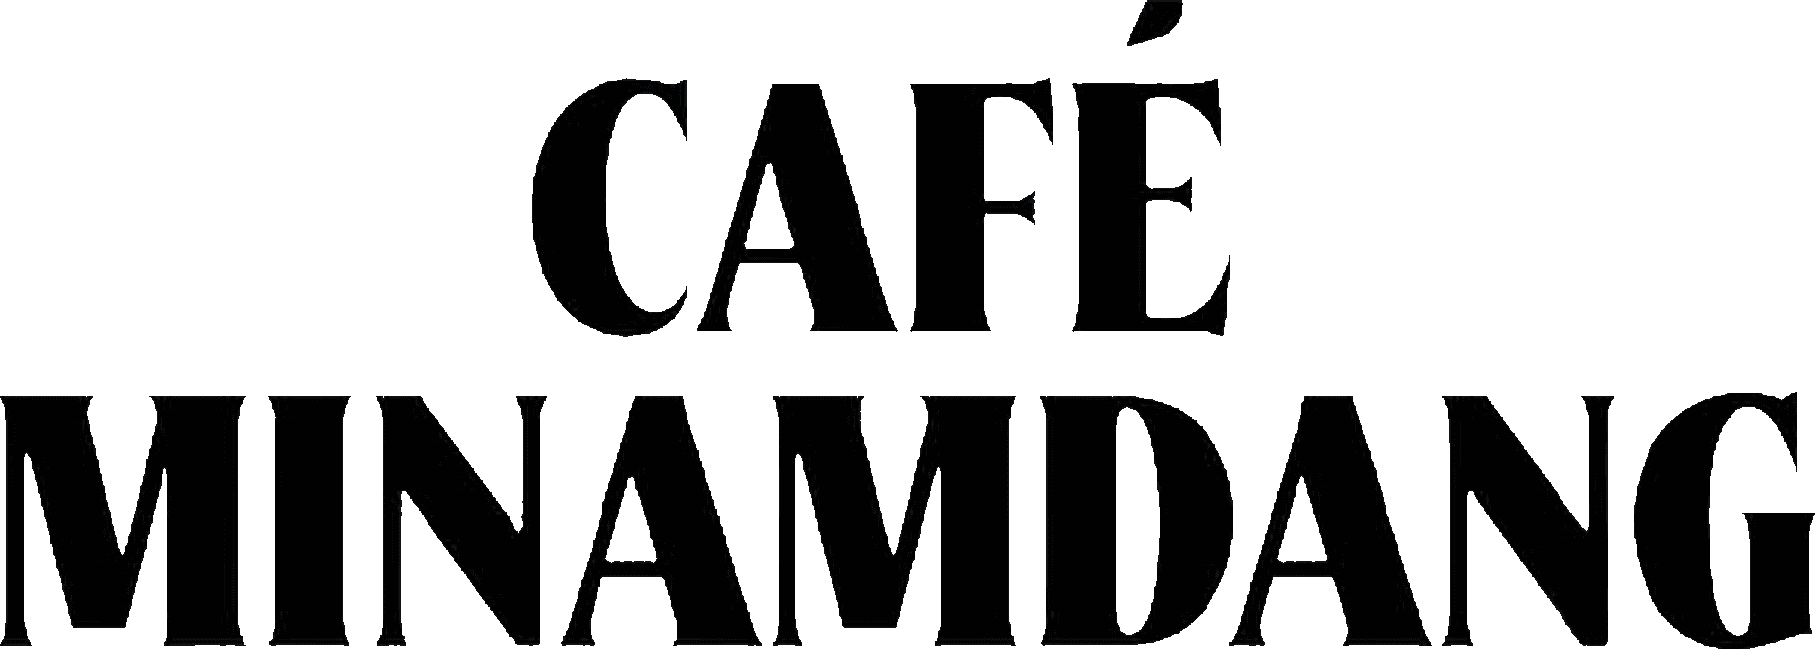 Café Minamdang logo